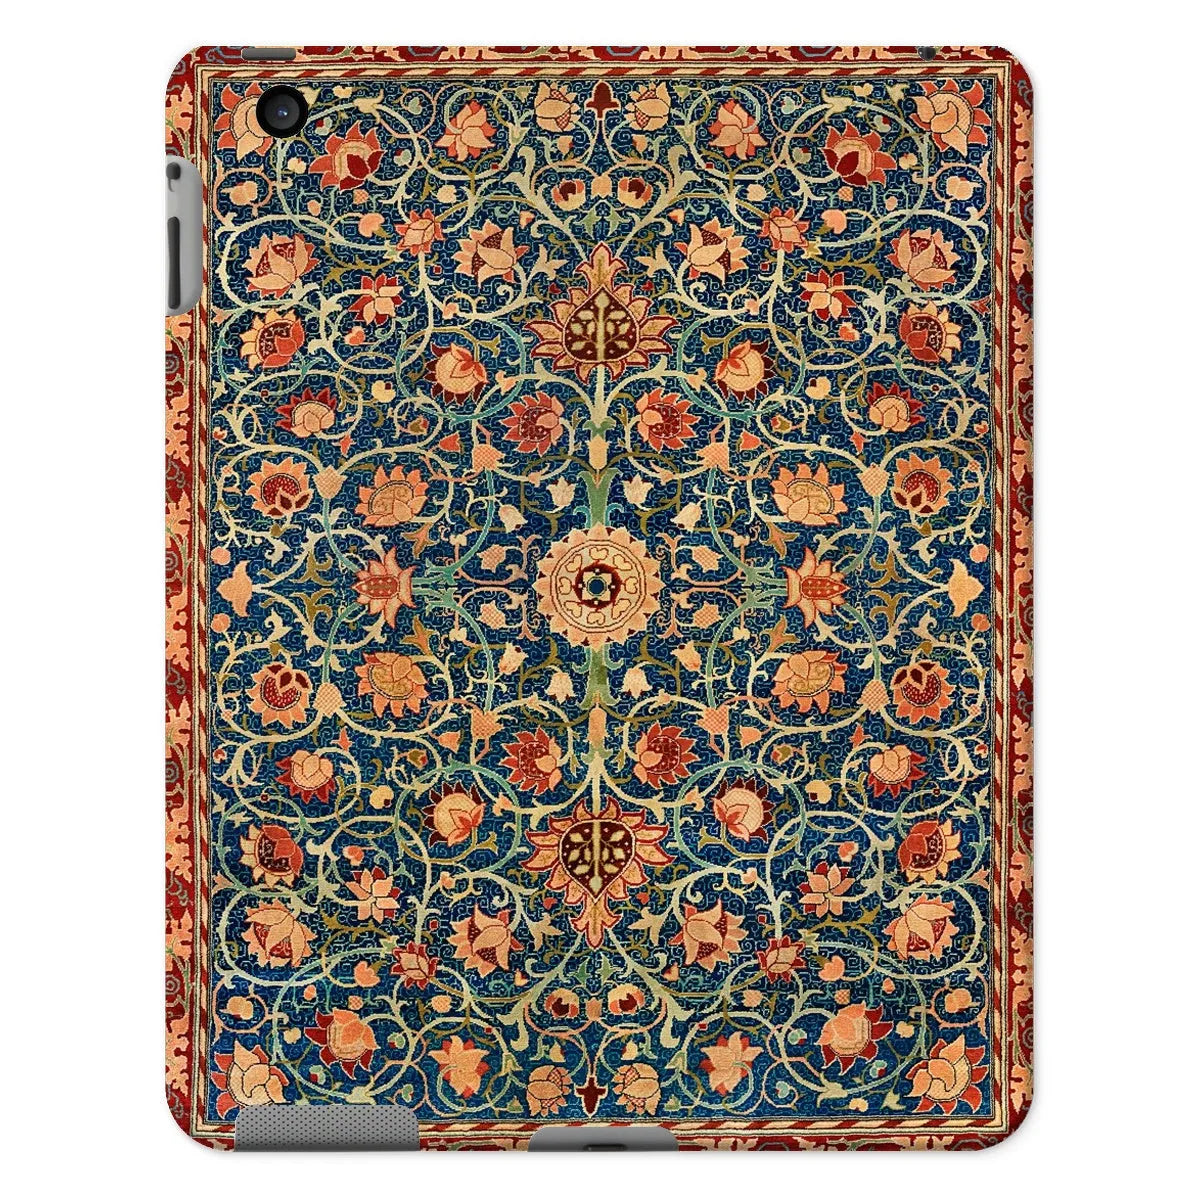 Holland Park Carpet By William Morris Aesthetic Ipad Case - Slim Designer Back Cover - Ipad 2/3/4 - Gloss - Tablet